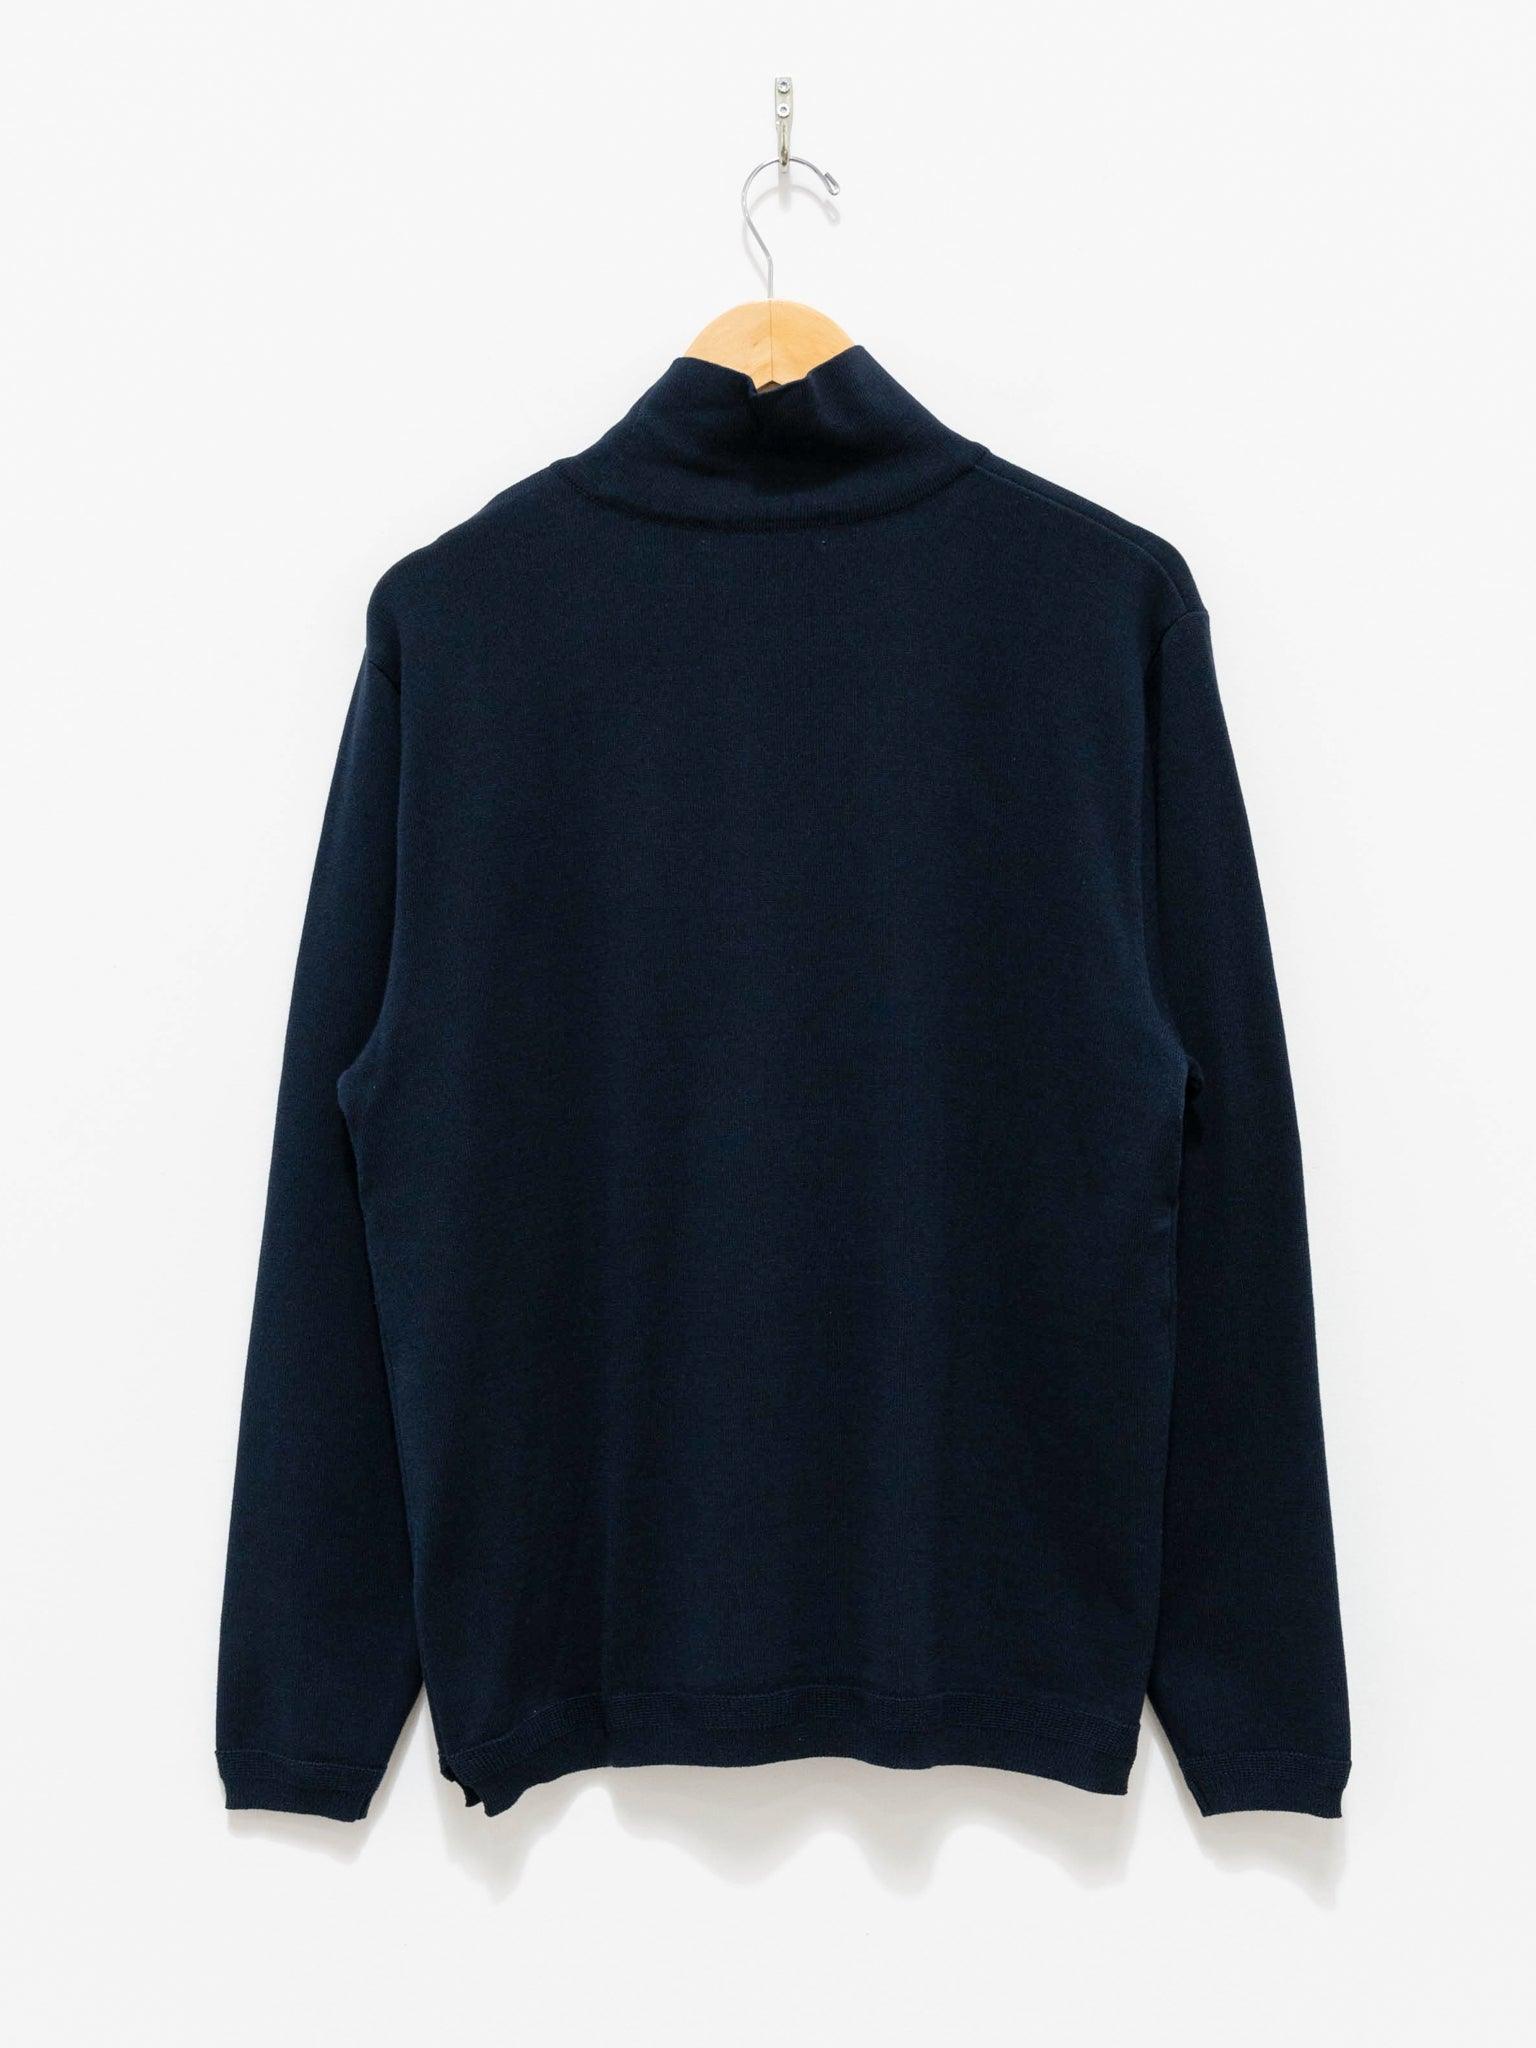 Namu Shop - Fujito Turtleneck Knit T-Shirt - Navy